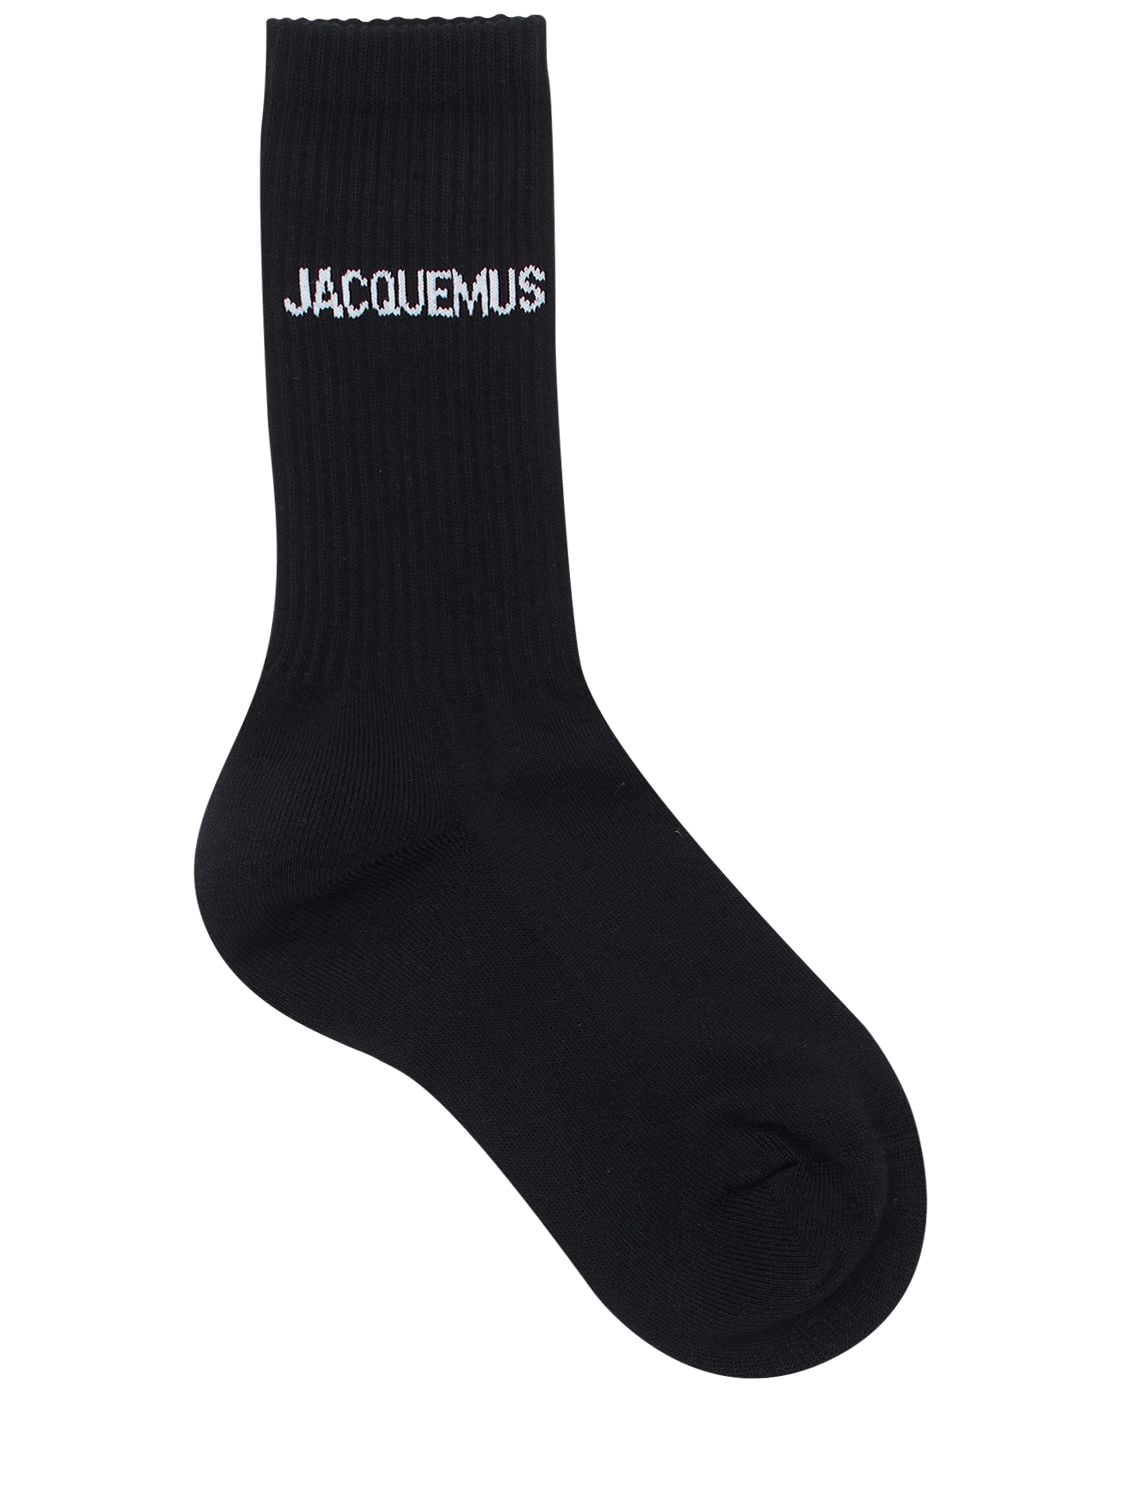 JACQUEMUS LES CHAUSSETTES棉质袜子,74I5LE033-QKXBQ0S1